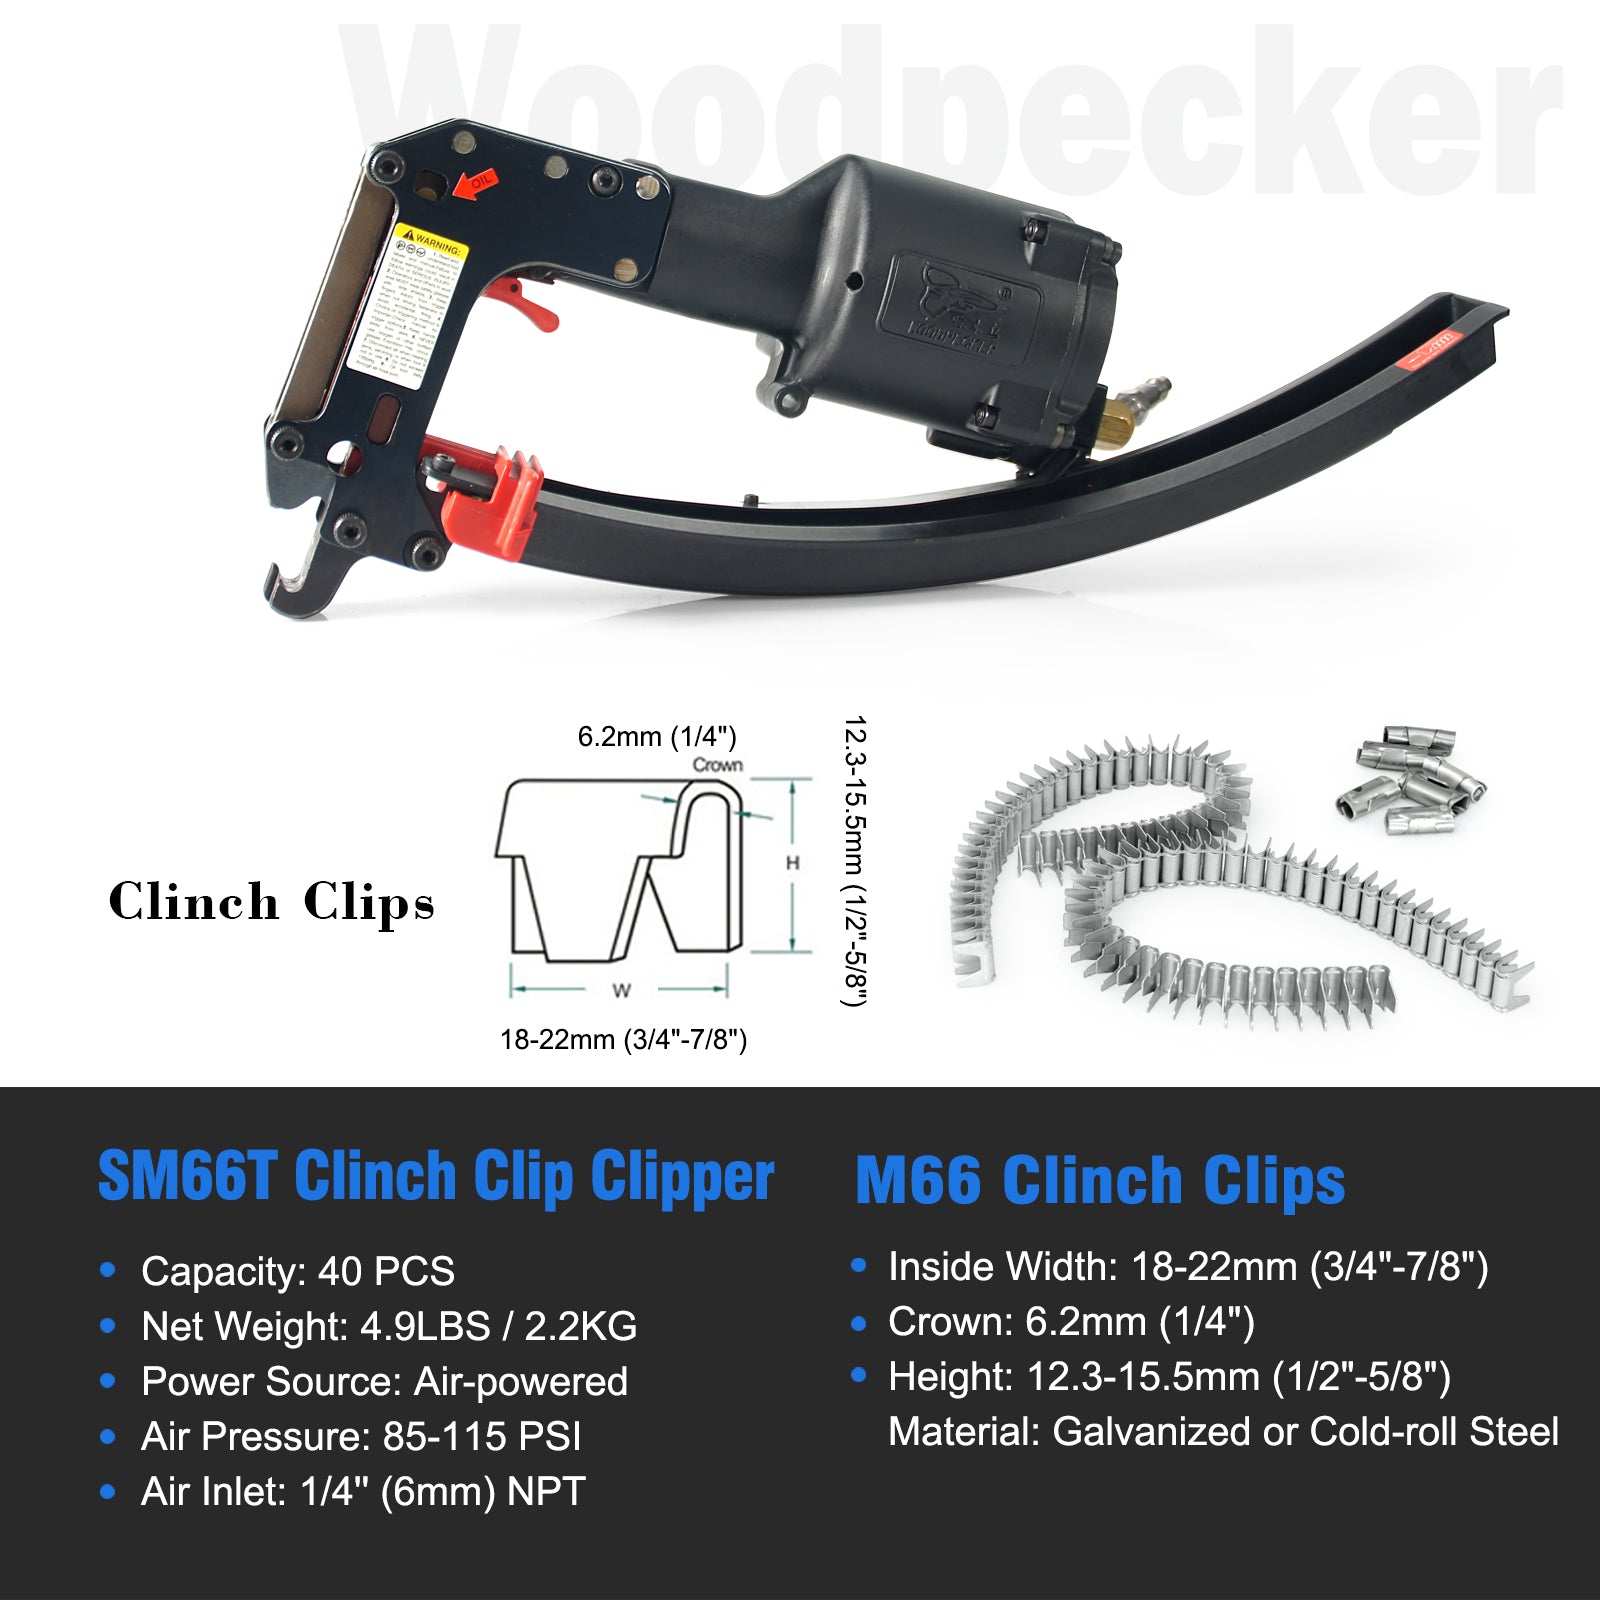 WOODPECKER SM66T Pneumatic Clinching Clipper Air Clinch Clip Tool Clips Clipper Clinching Clipper Gun